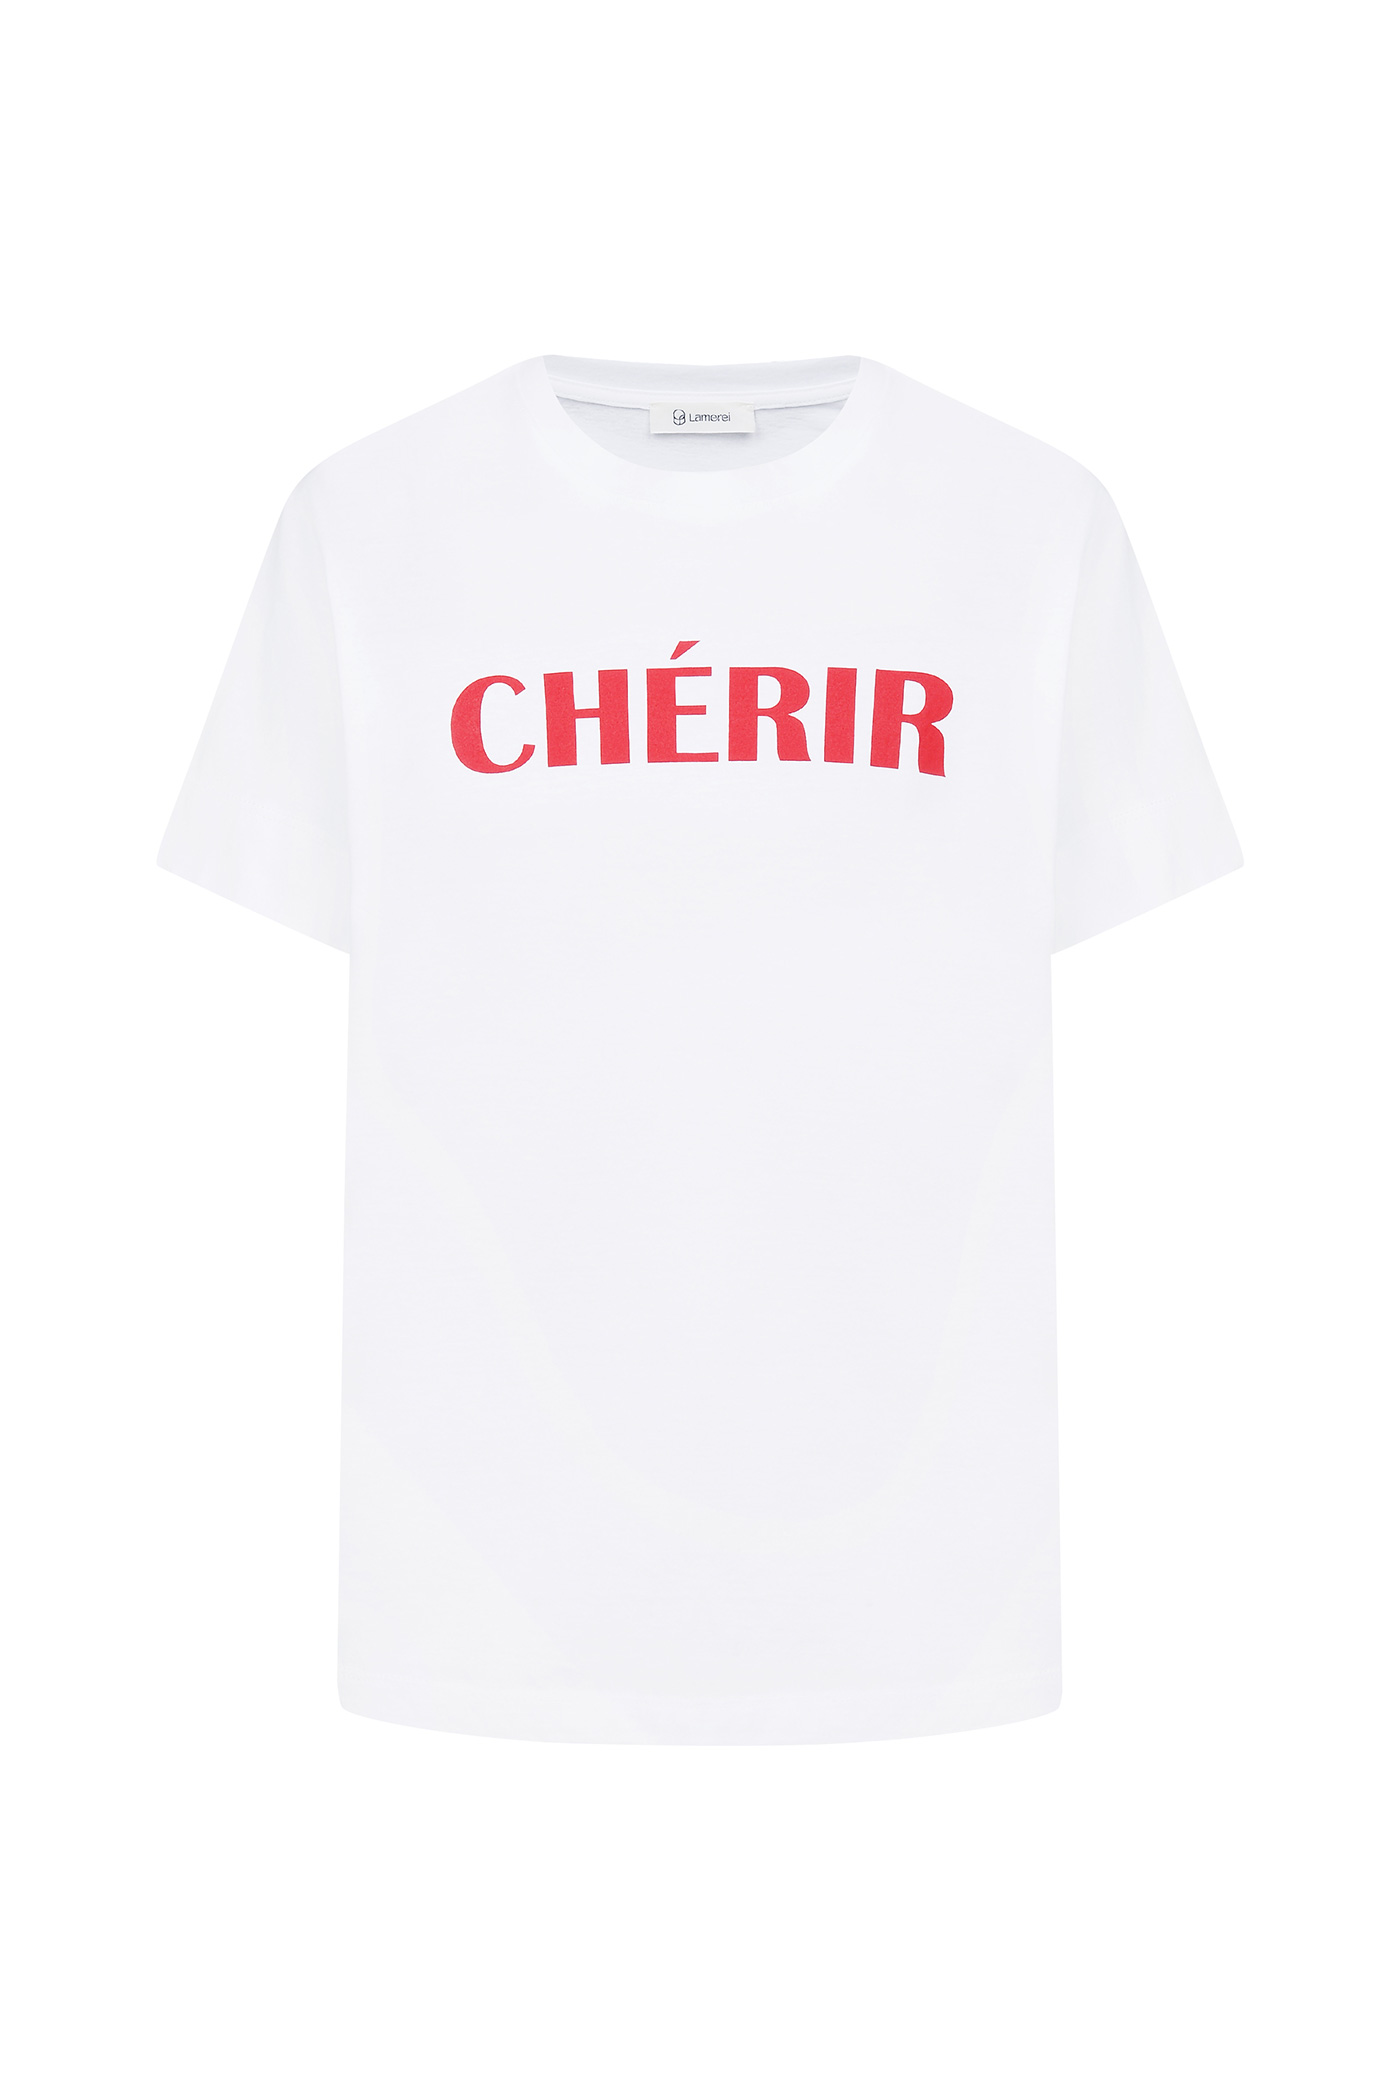 CHERIR Top-Red